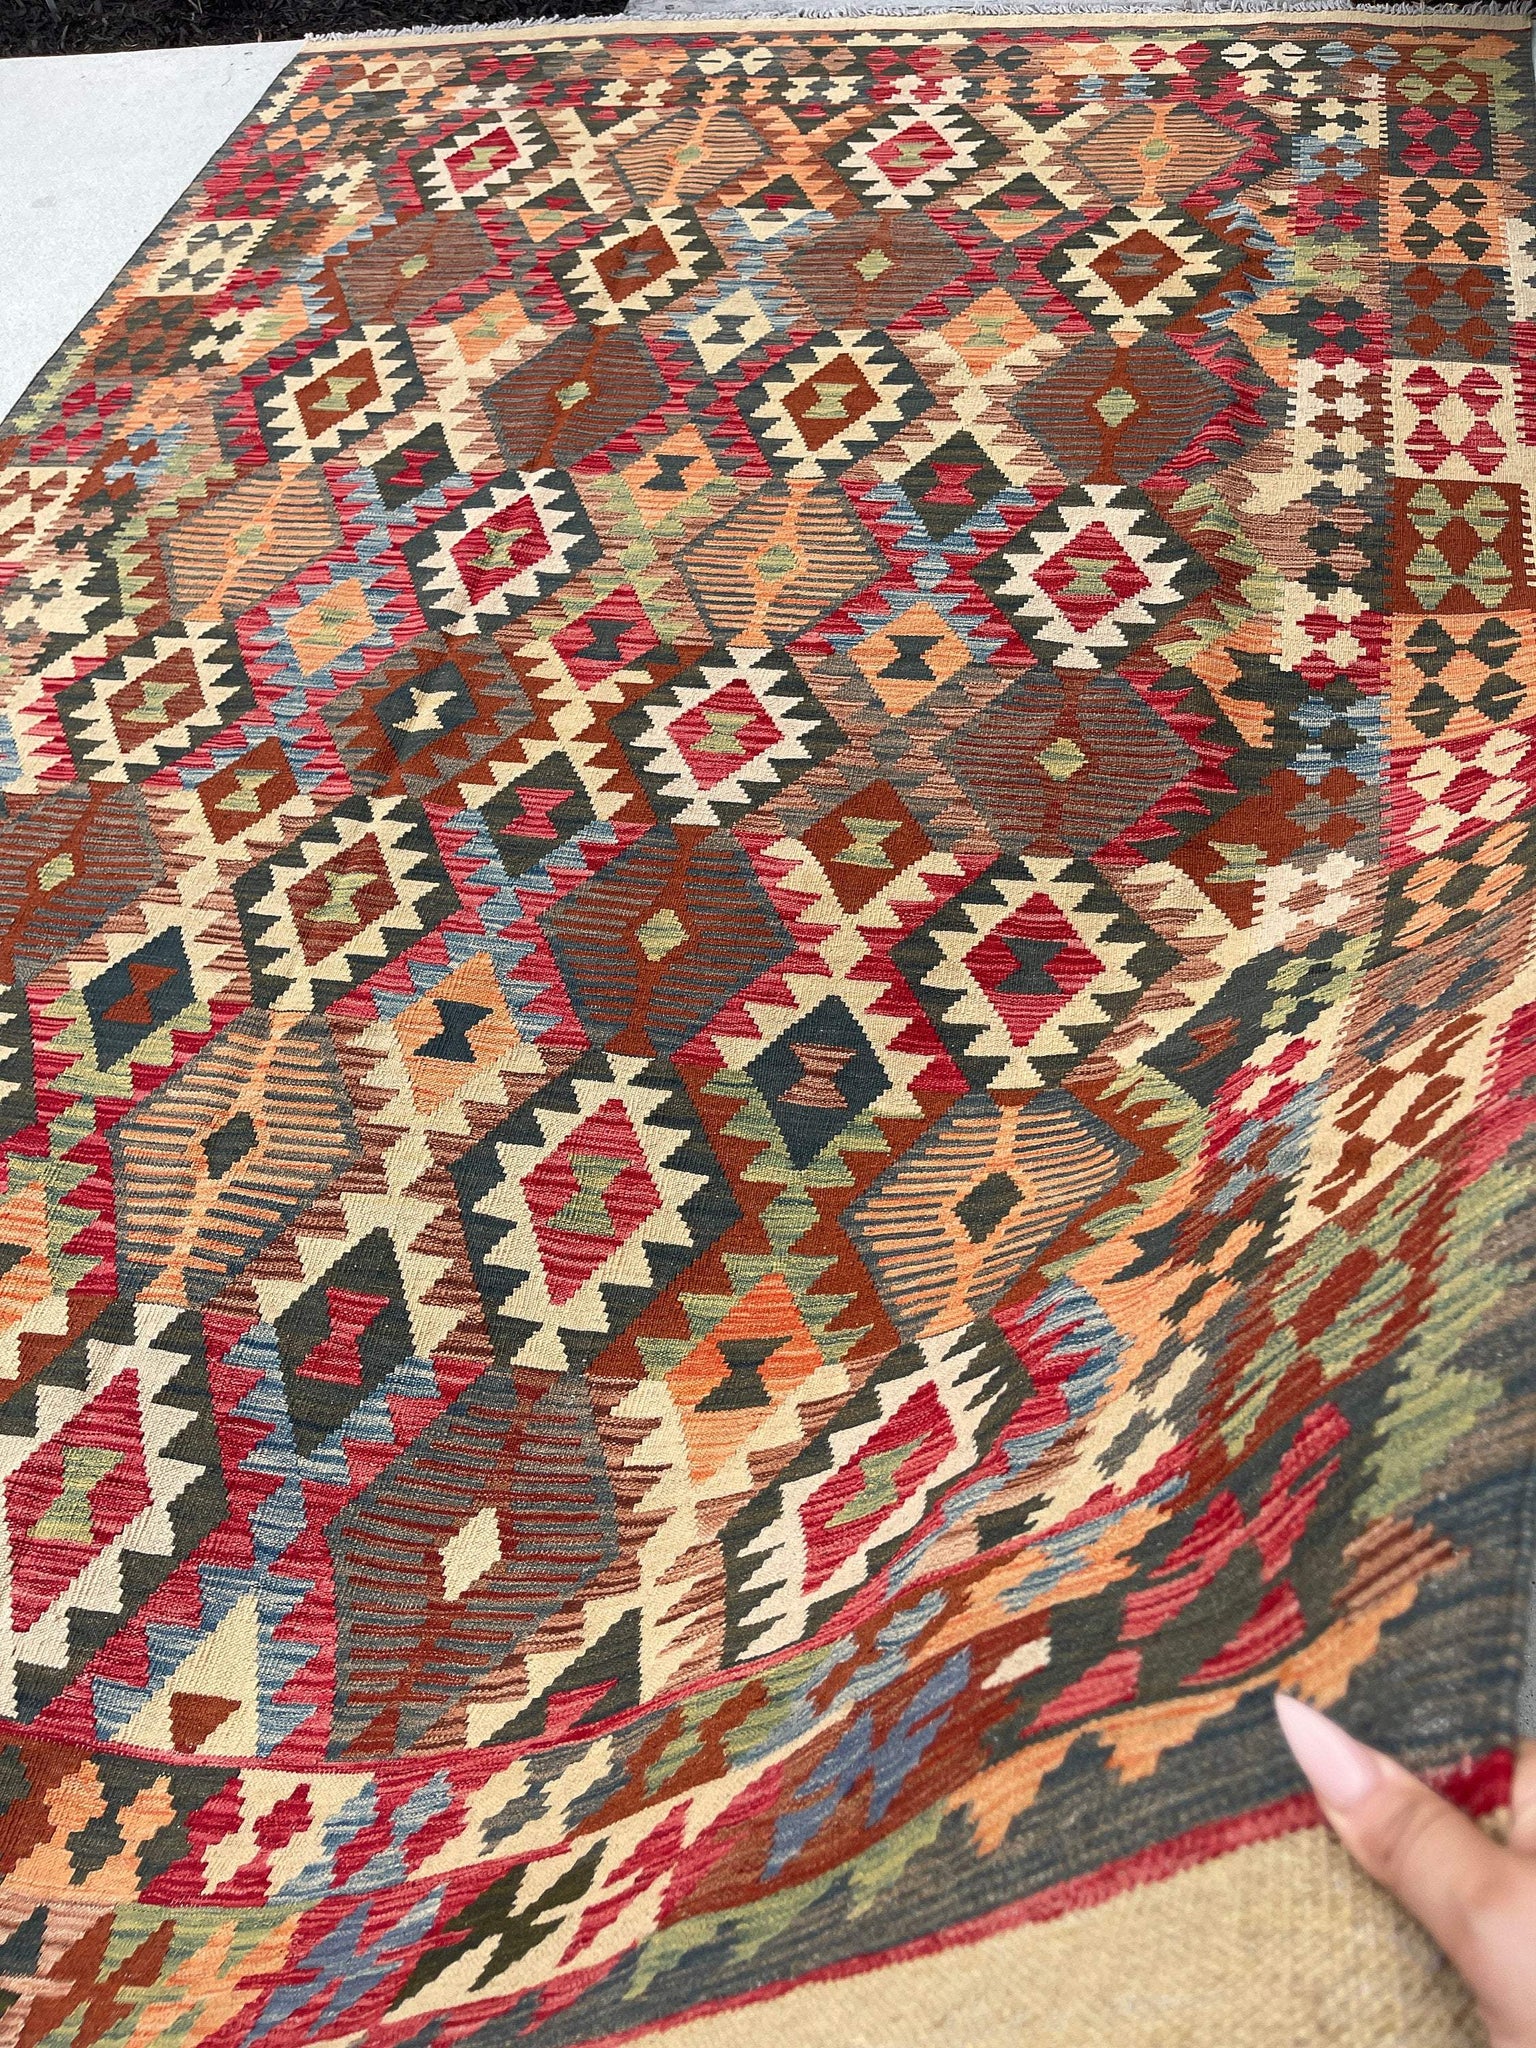 7x10 (215x305) Handmade Afghan Kilim Flatweave Rug | Orange Brown Red Ivory| Boho Tribal Moroccan Outdoor Wool Knotted Woven